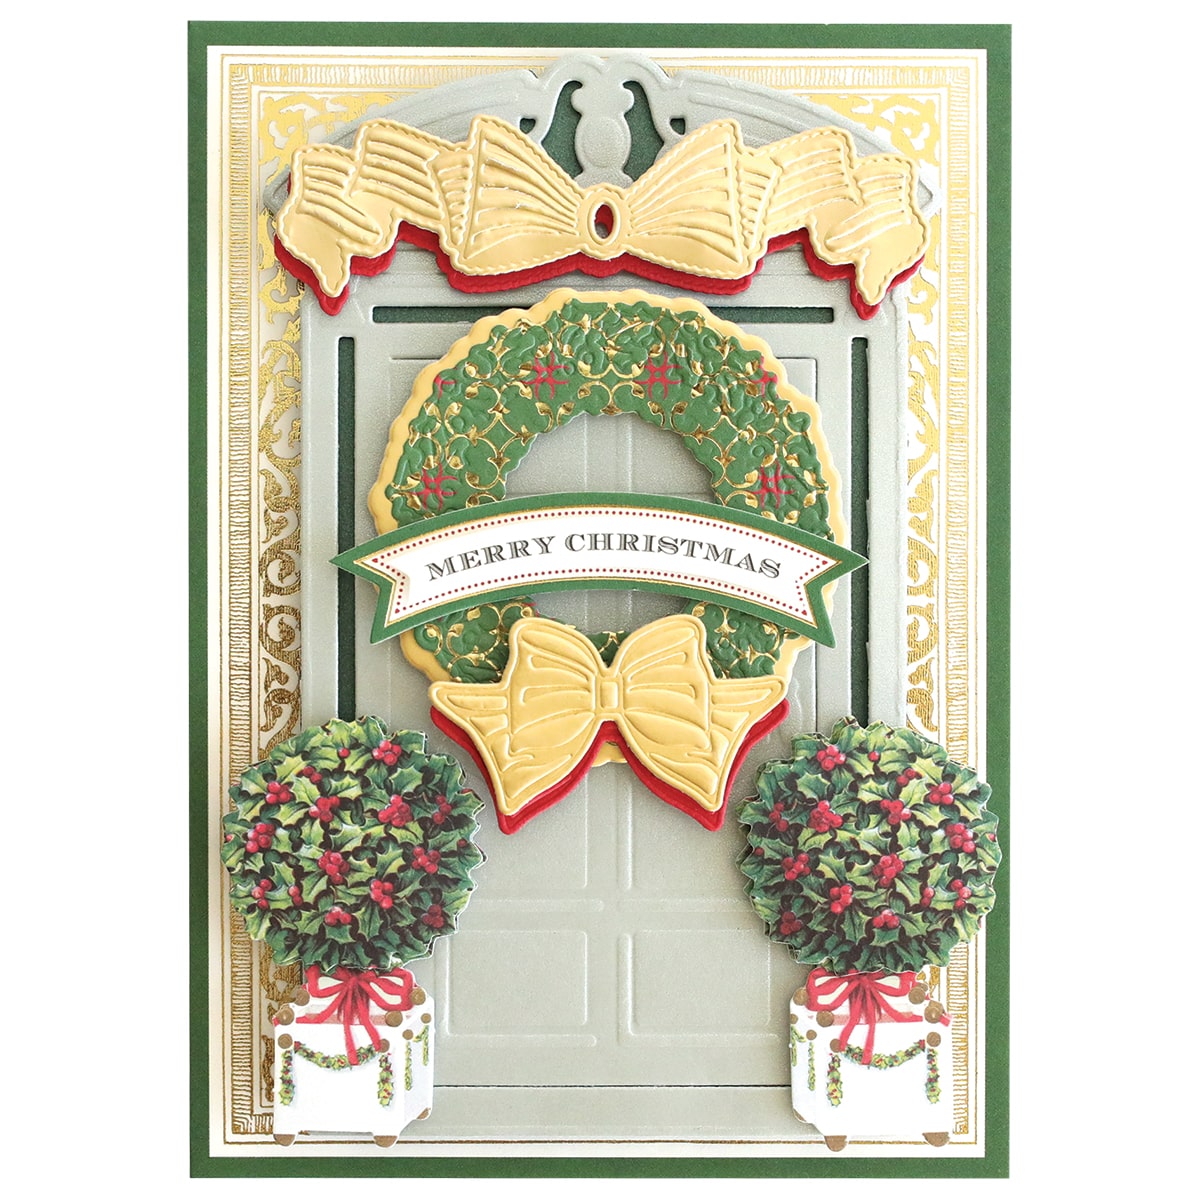 a christmas card with a bow and wreath.